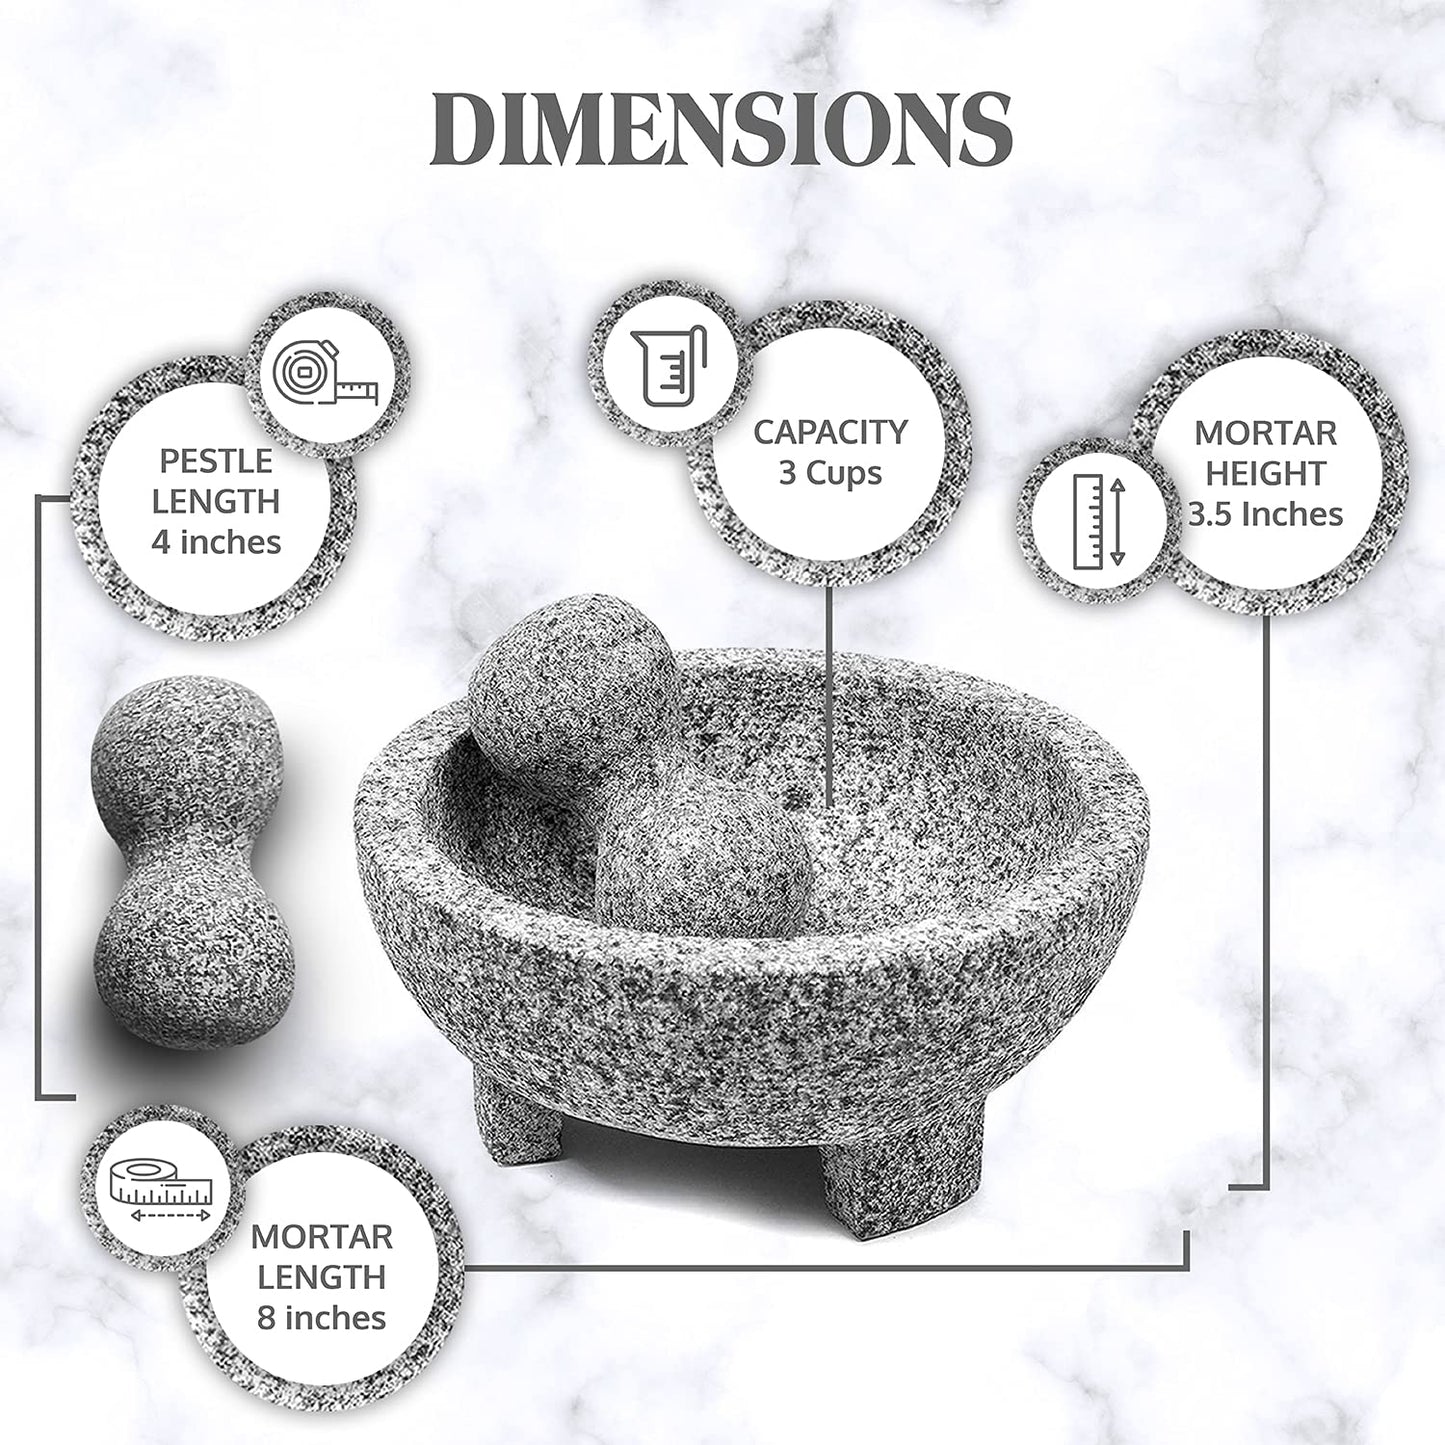 Granite Mortar and Pestle Set Guacamole Bowl Molcajete 8 Inch - Natural Stone Grinder for Spices, Seasonings, Pastes, Pestos and Guacamole - Extra Bonus Avocado Tool Included